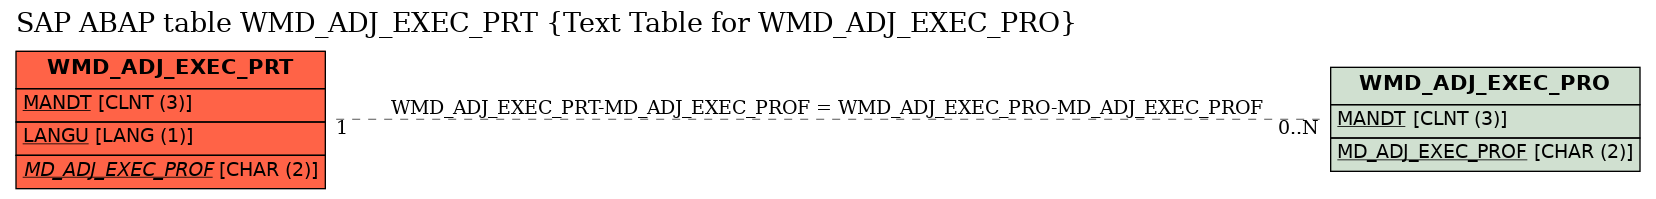 E-R Diagram for table WMD_ADJ_EXEC_PRT (Text Table for WMD_ADJ_EXEC_PRO)